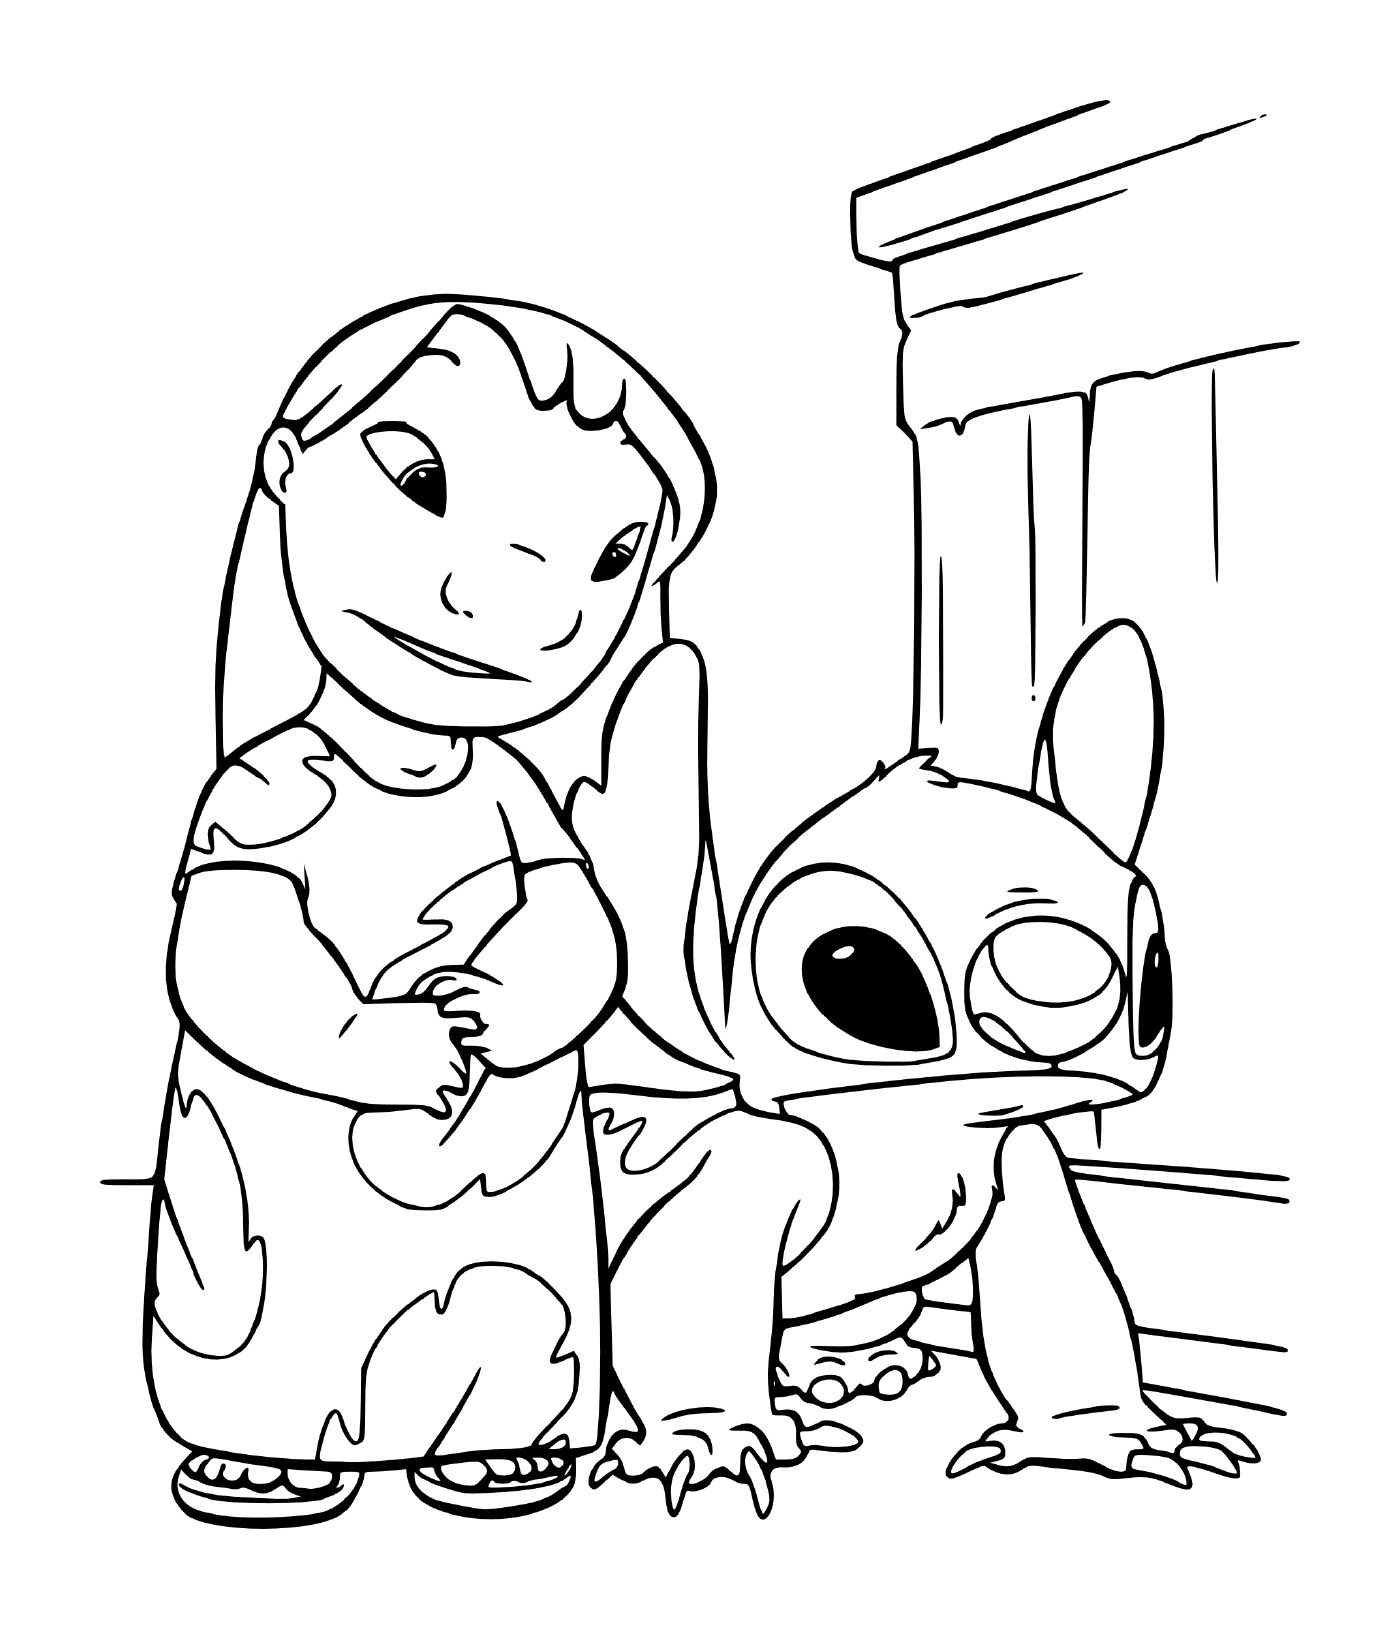  Lilo and Stitch together 